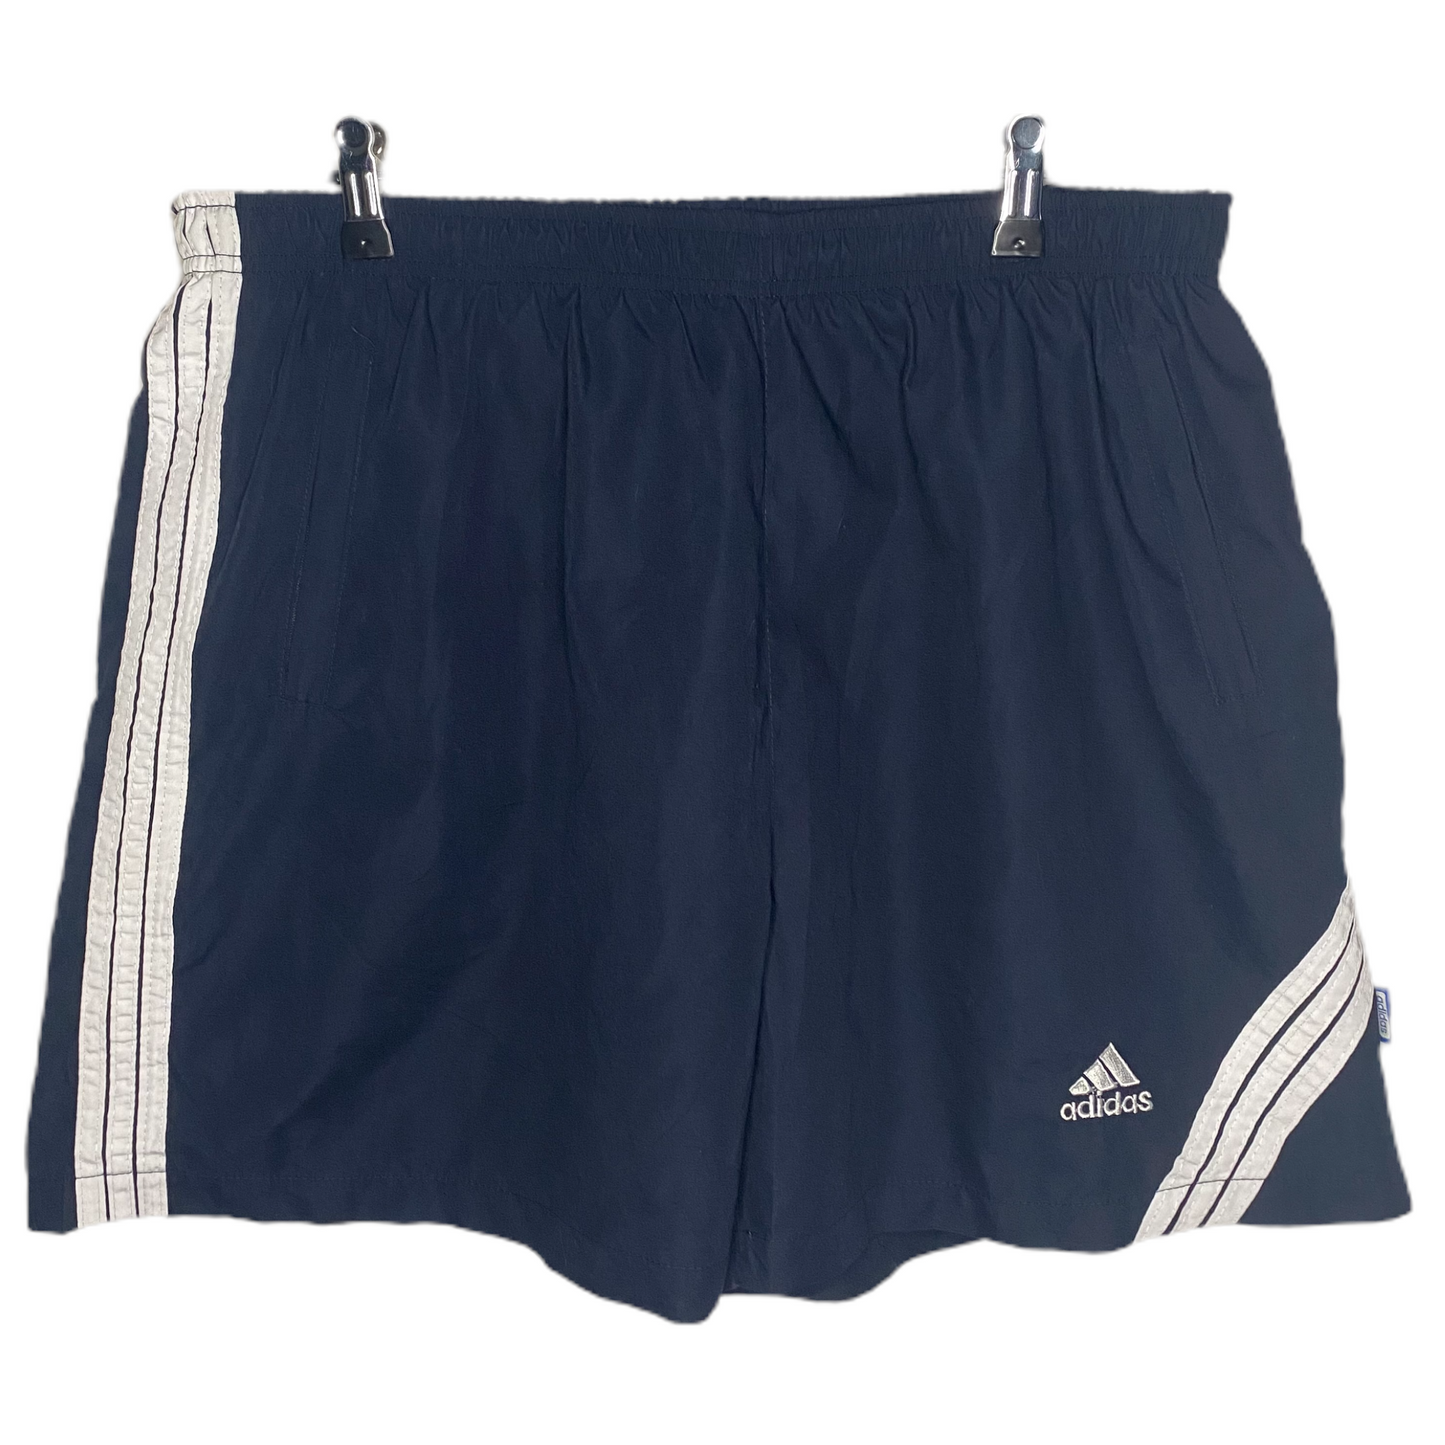 Adidas Navy Striped Shorts